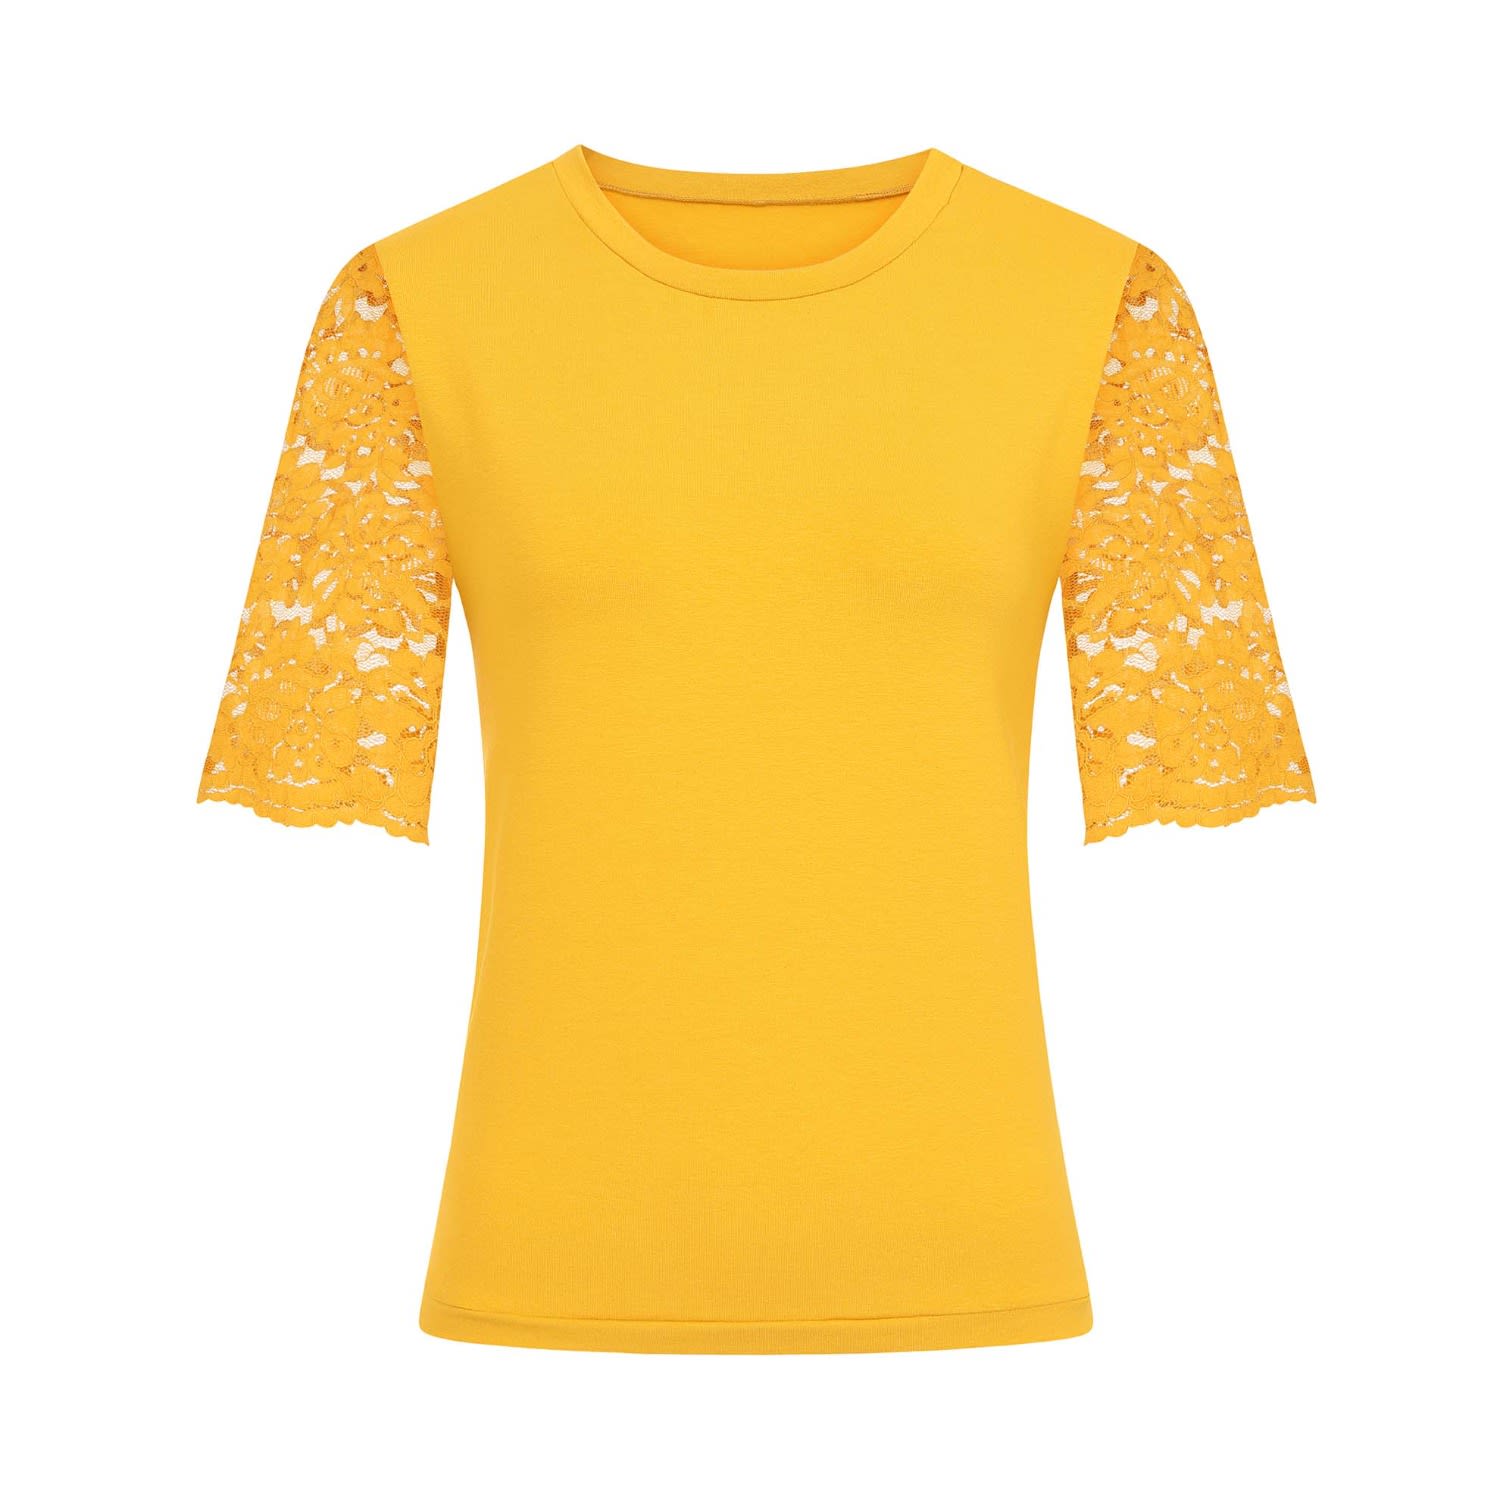 Women’s Yellow / Orange Mustard Cotton Lace Sleeve T-Shirt Large Sophie Cameron Davies